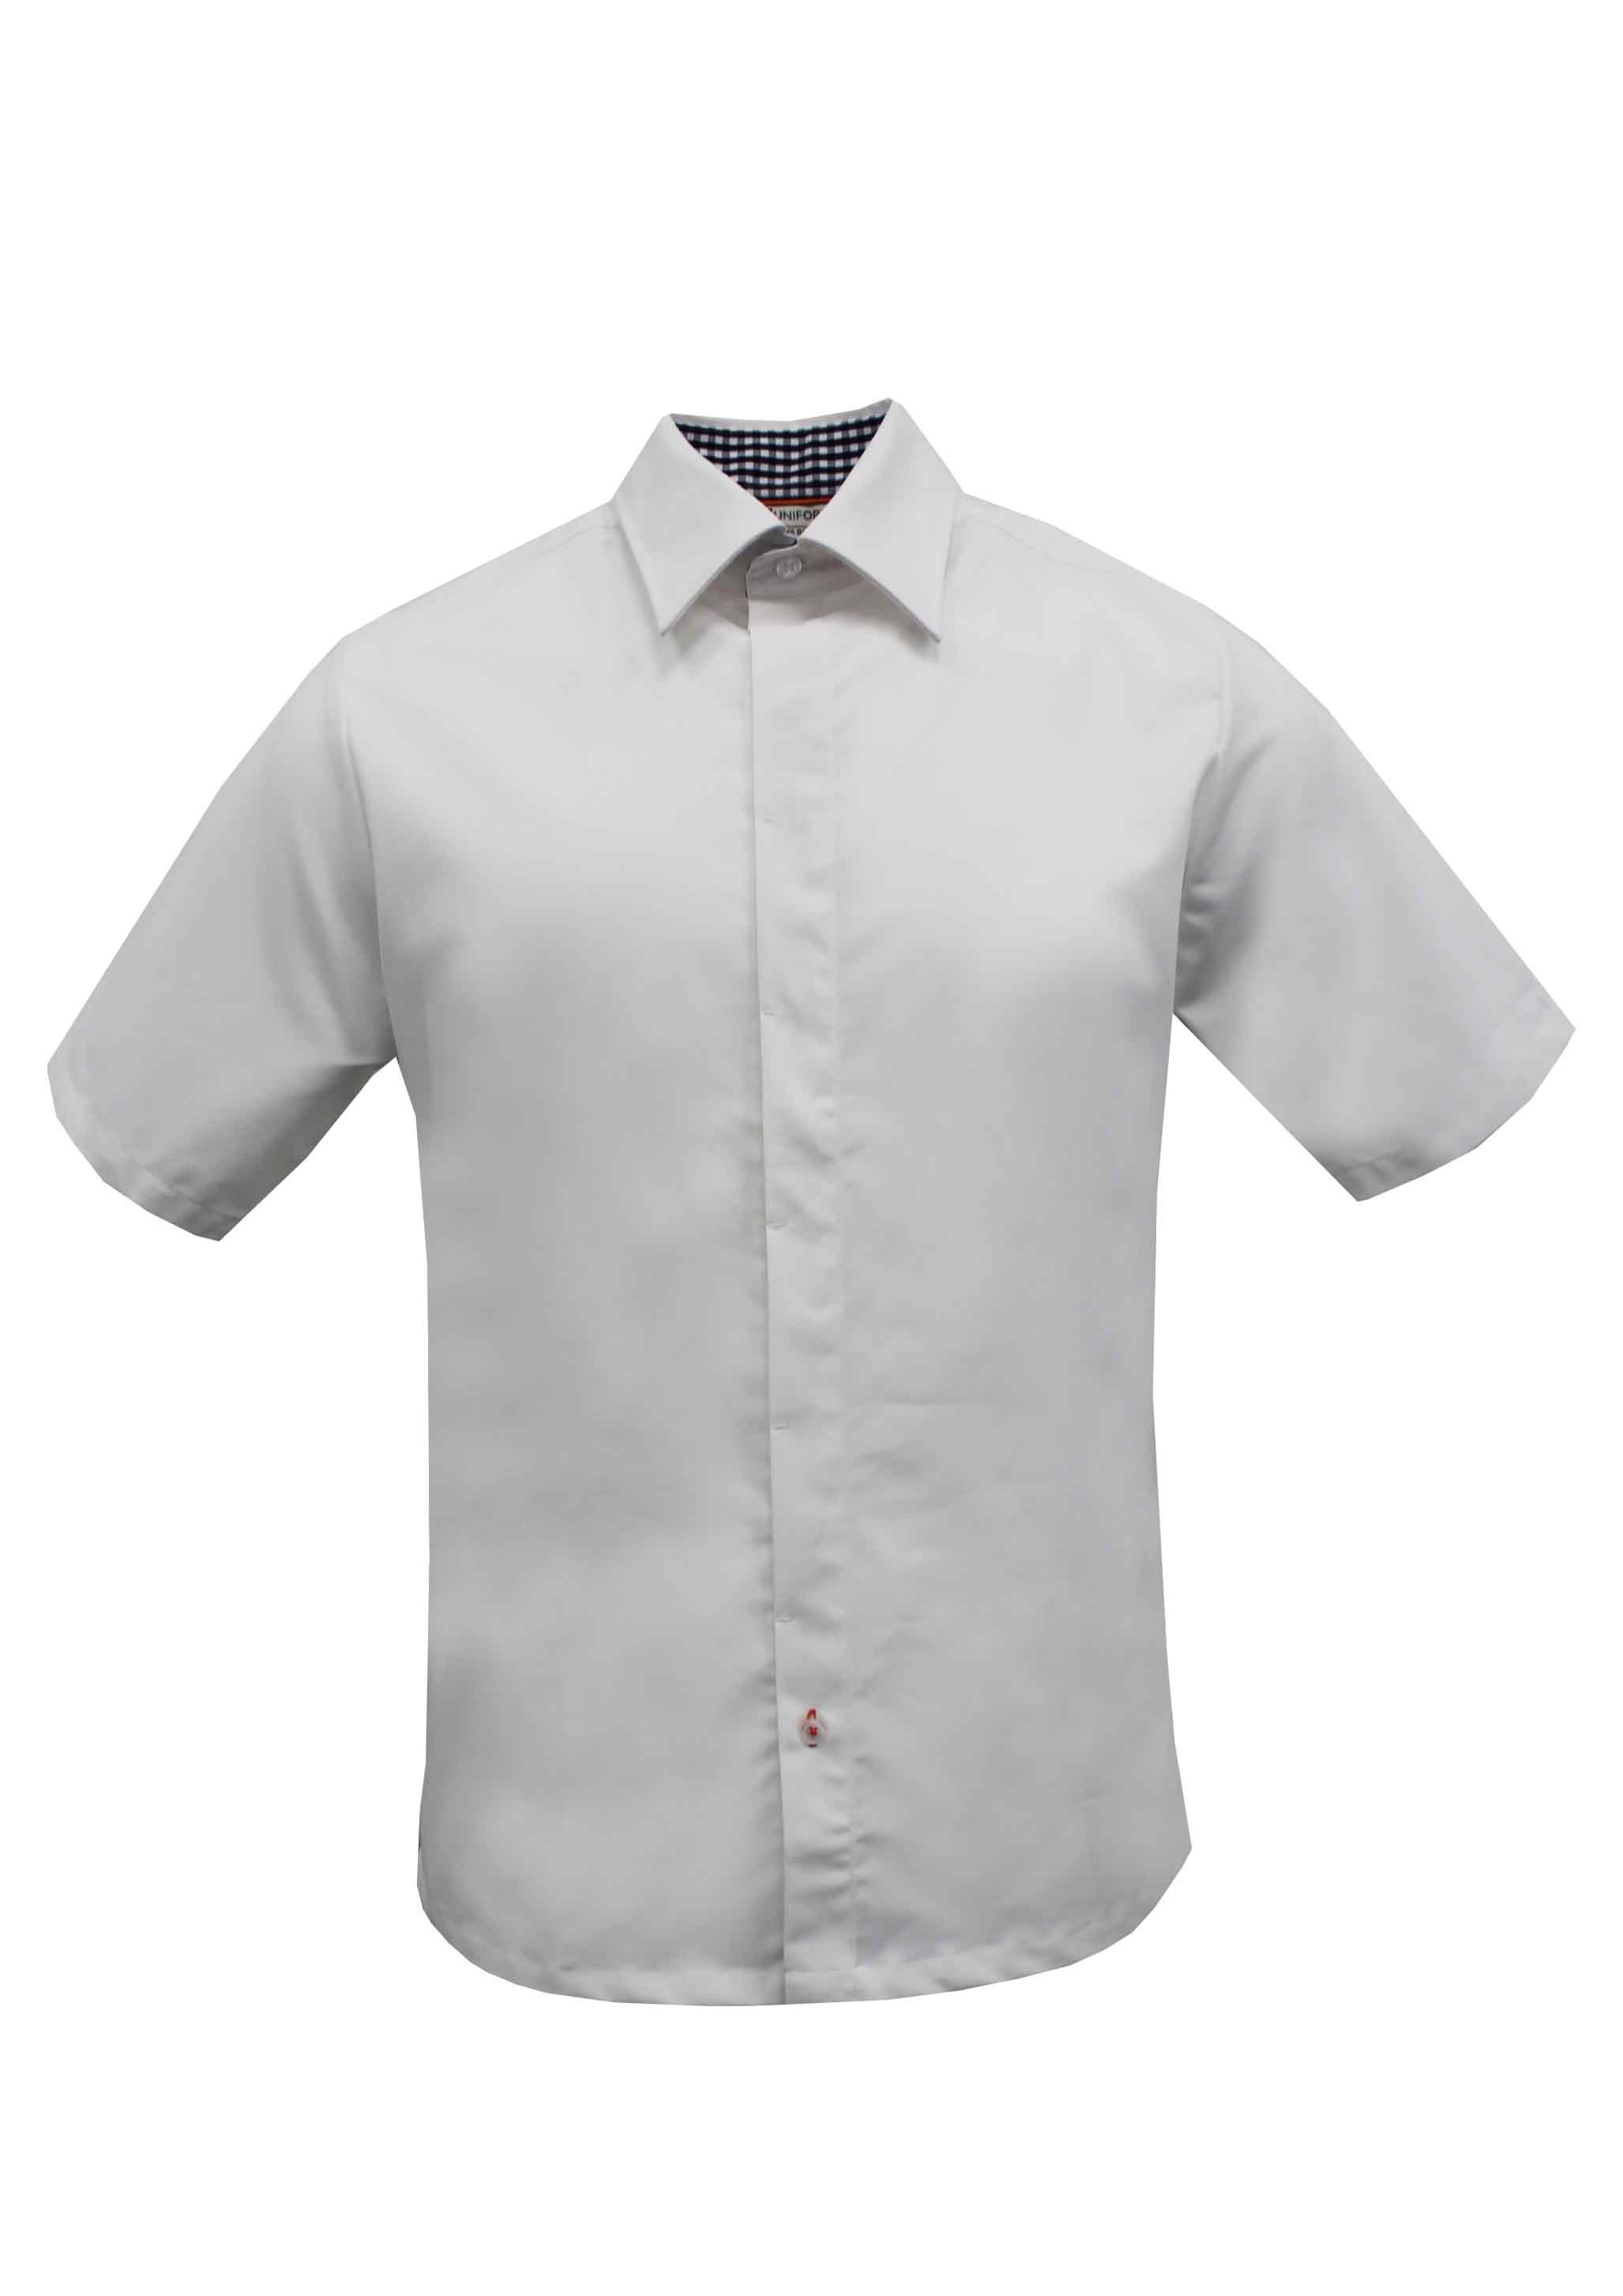 Rototuna Senior SS Shirt White/Navy | Rototuna High Schools